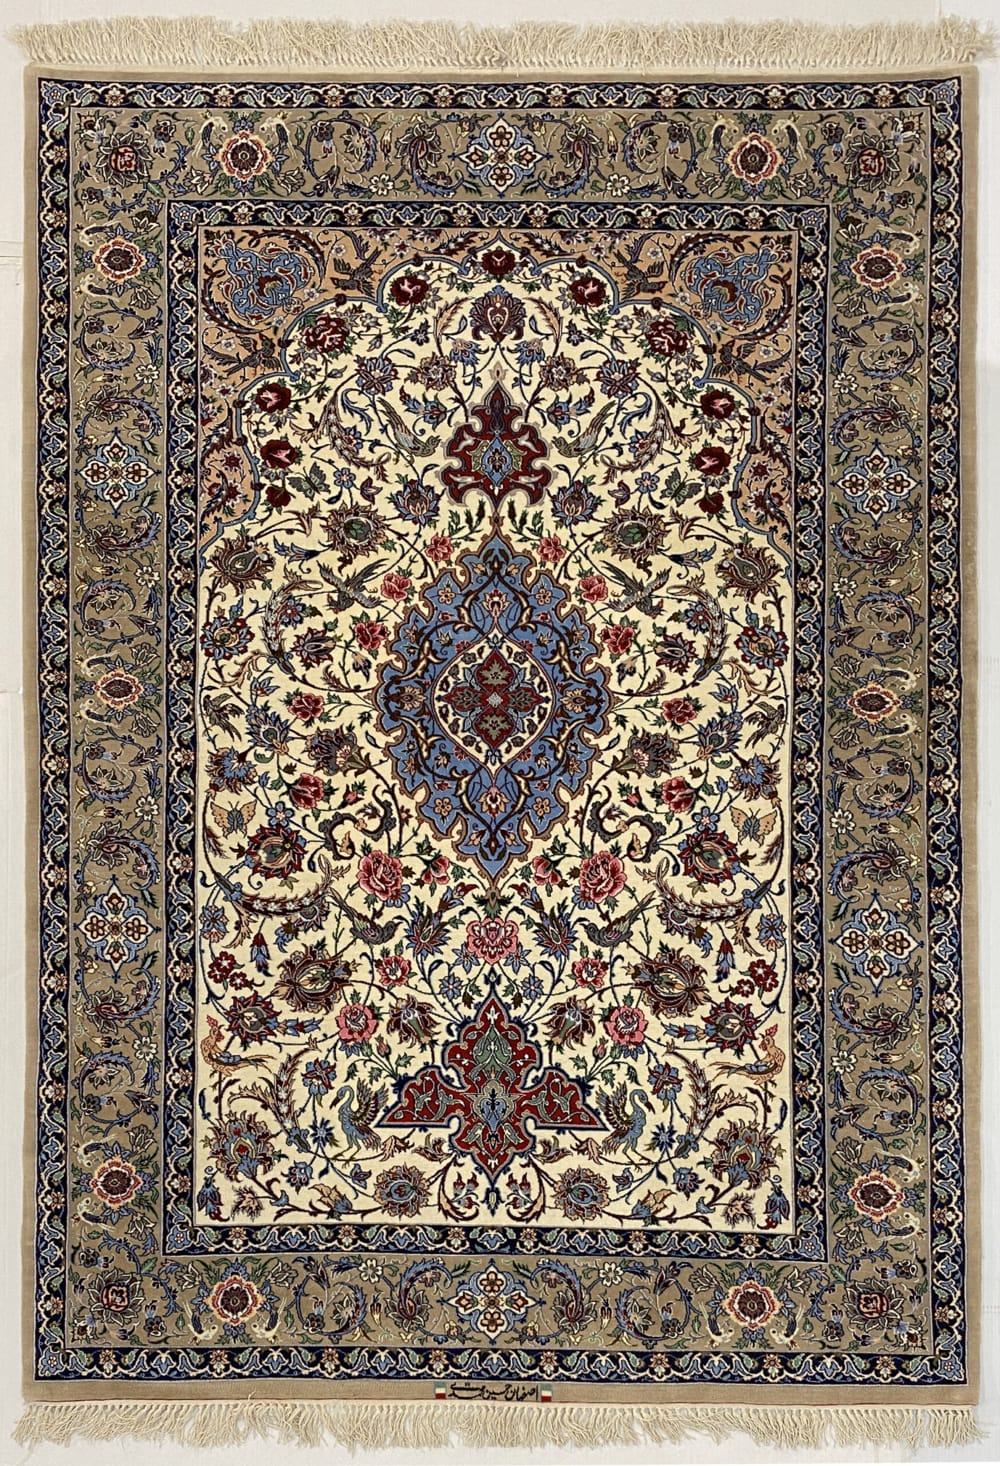 Rug# 10123, Isfehan, Kork-wool & silk pile on a full silk foundation, 900k KPSQM, Signed, circa 1980, Persia, size 192x130 cm (2)